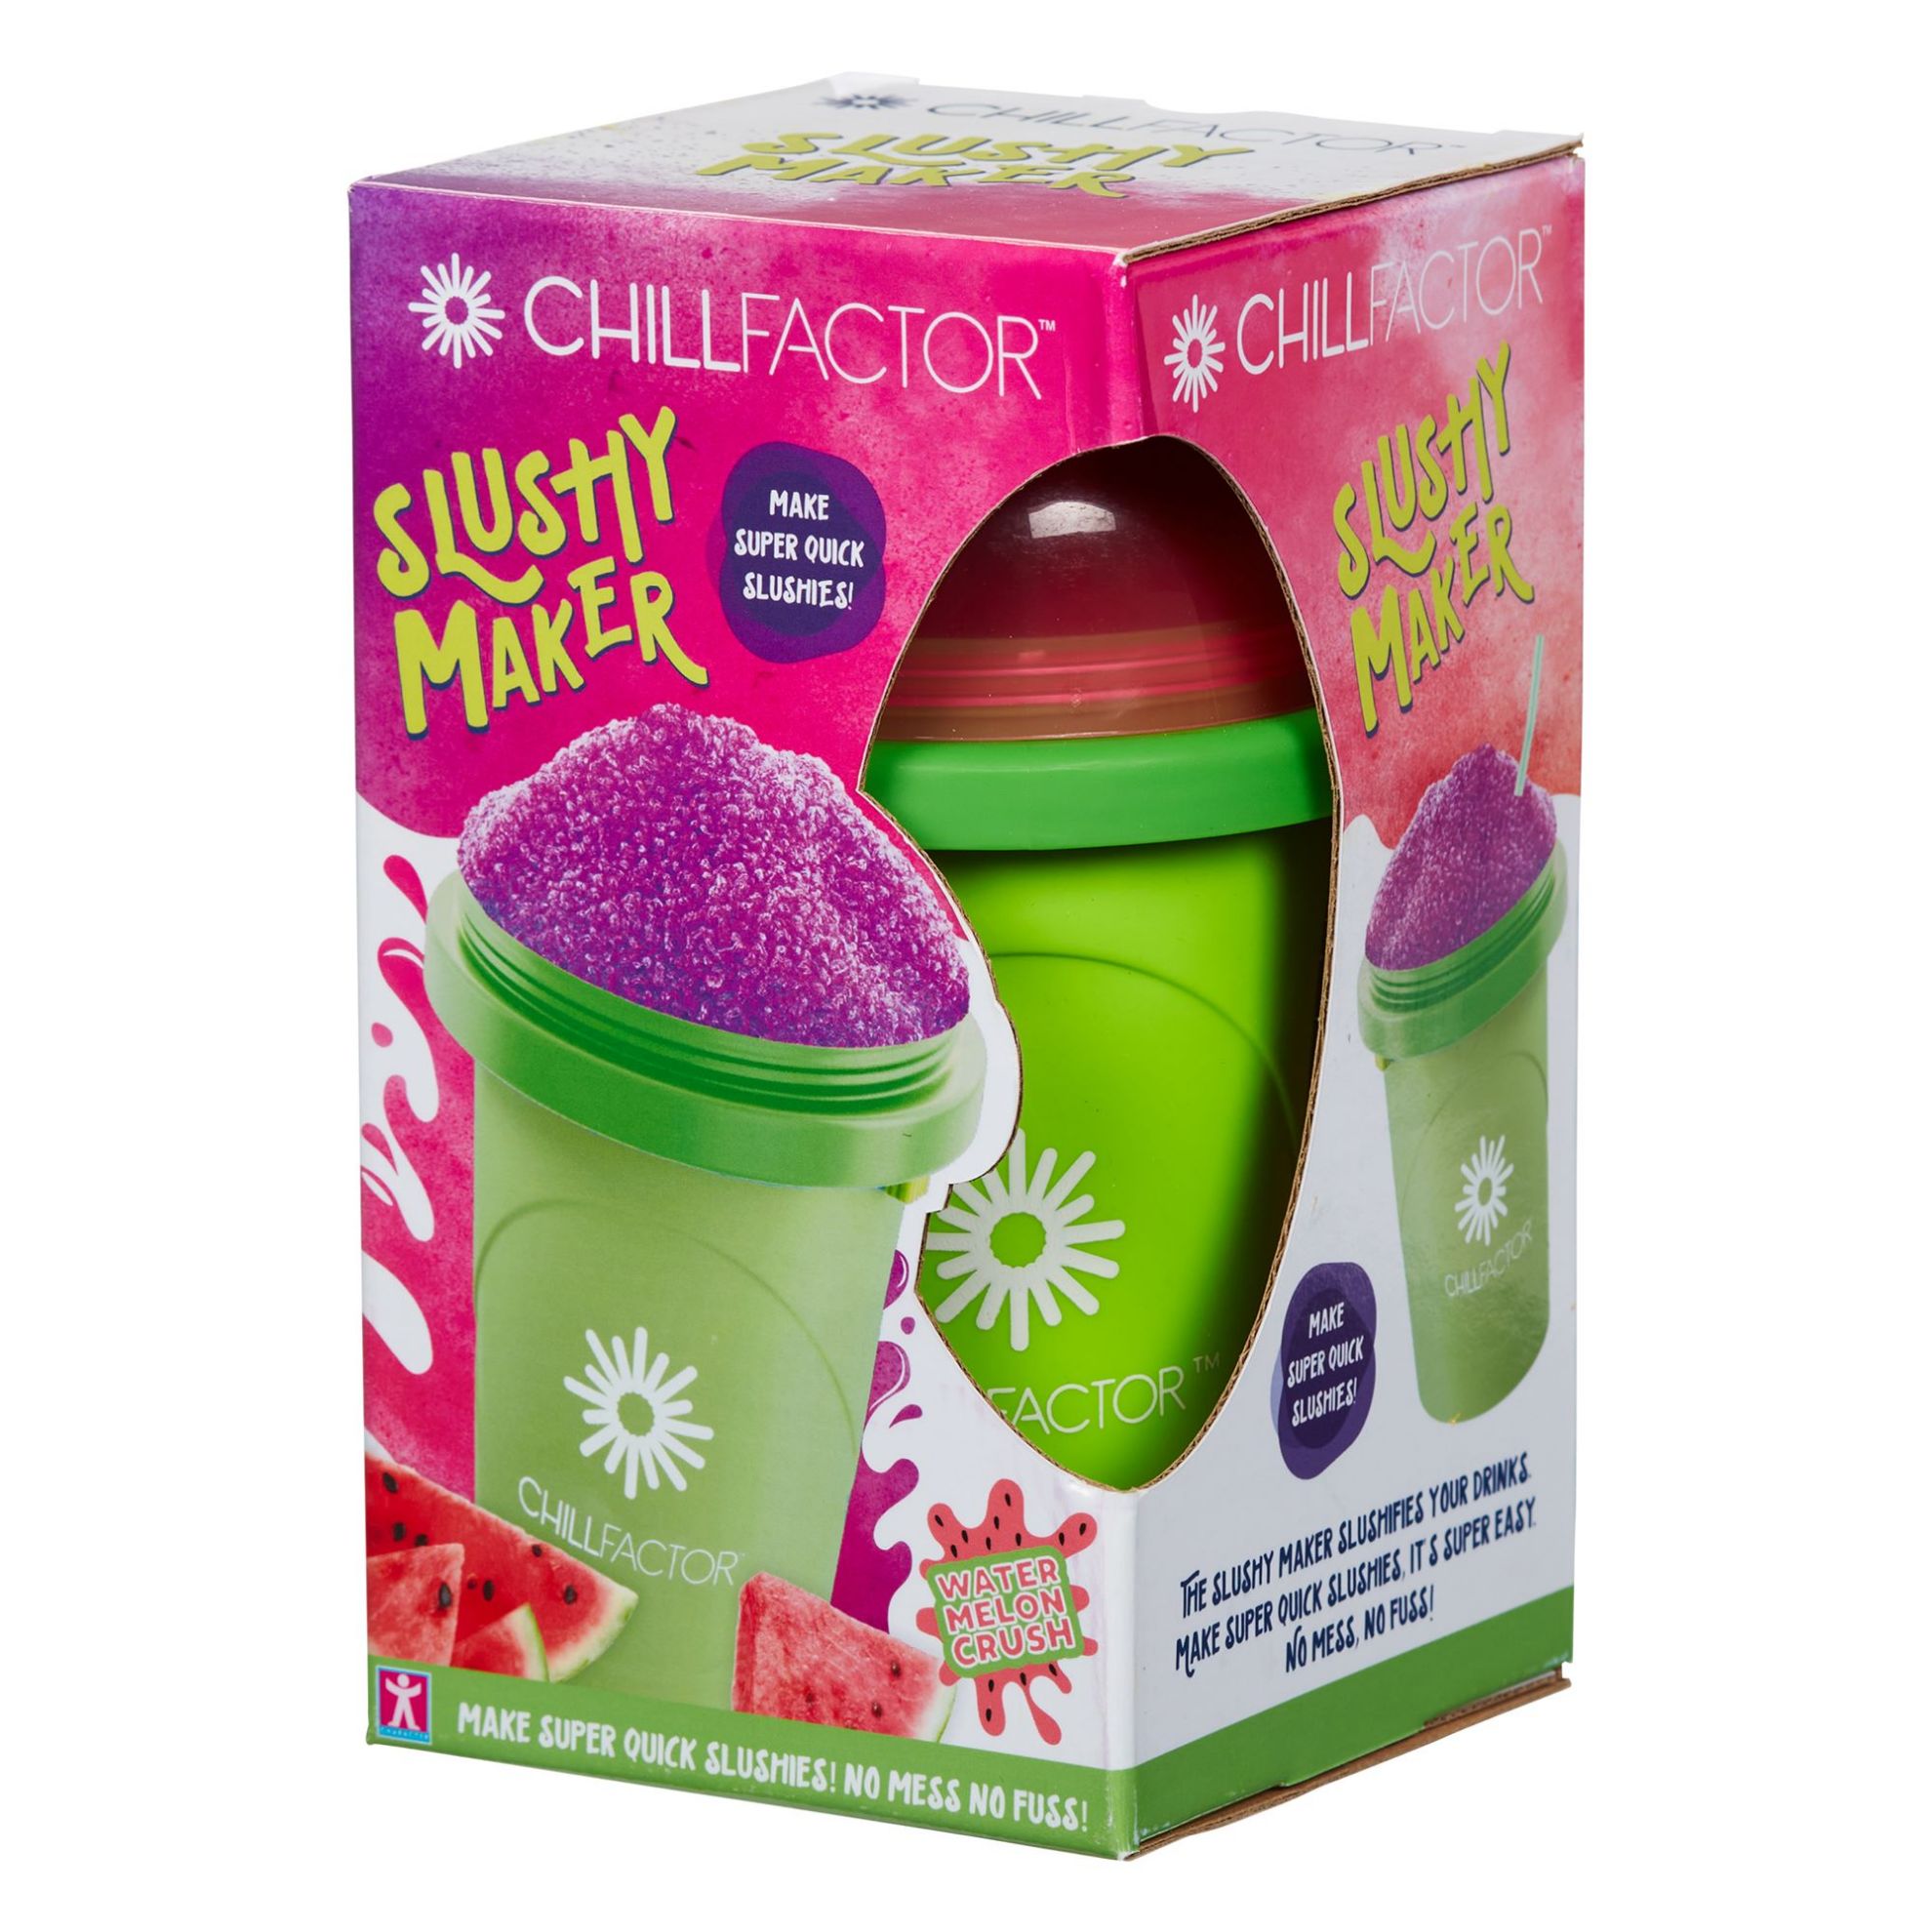 ChillFactor Slushy Maker - Watermelon Crush